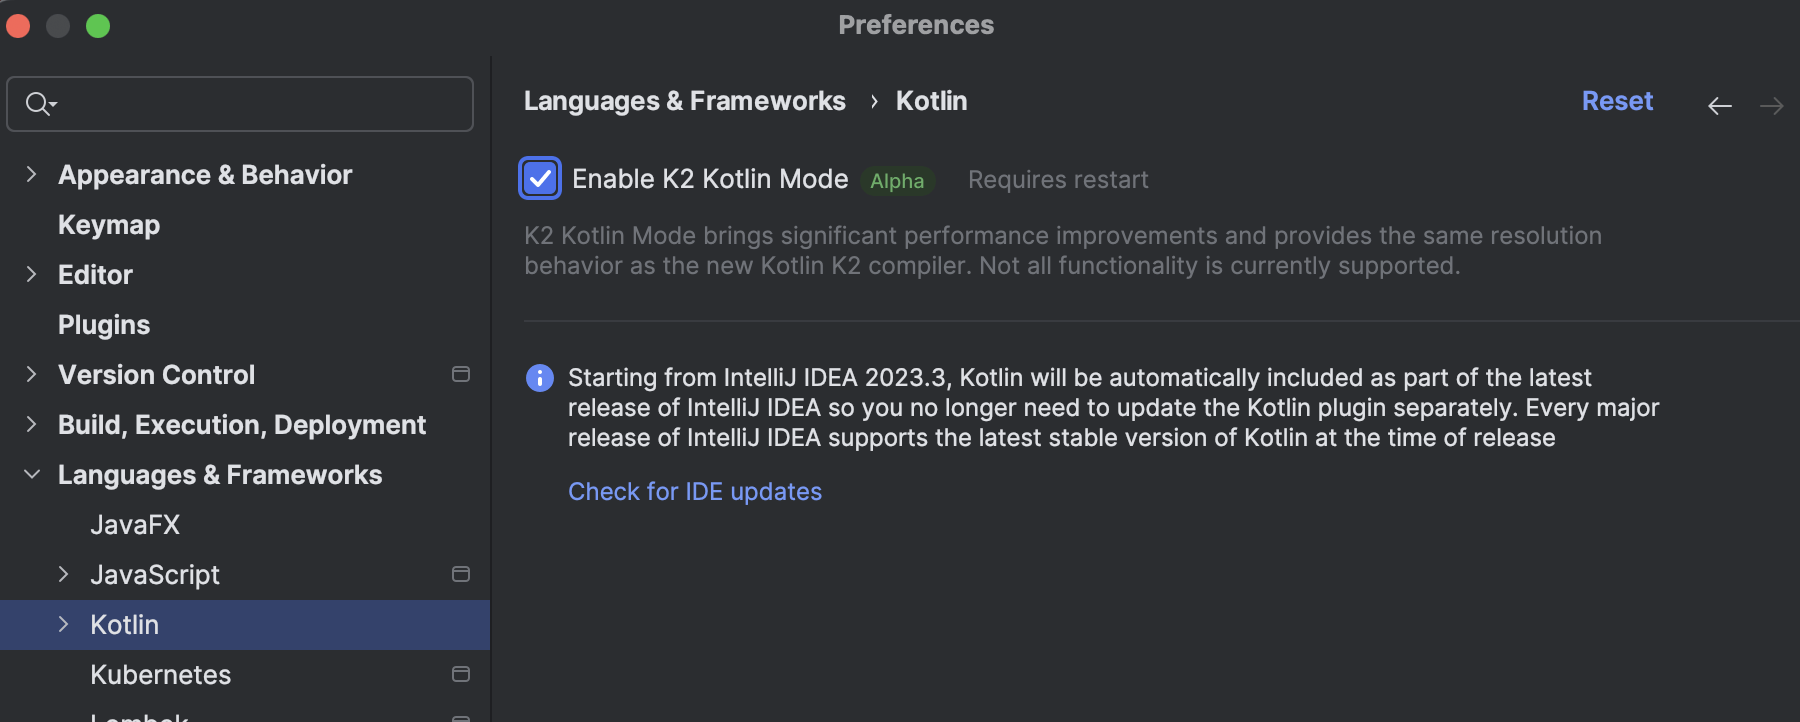 K2 Kotlin 모드 알파